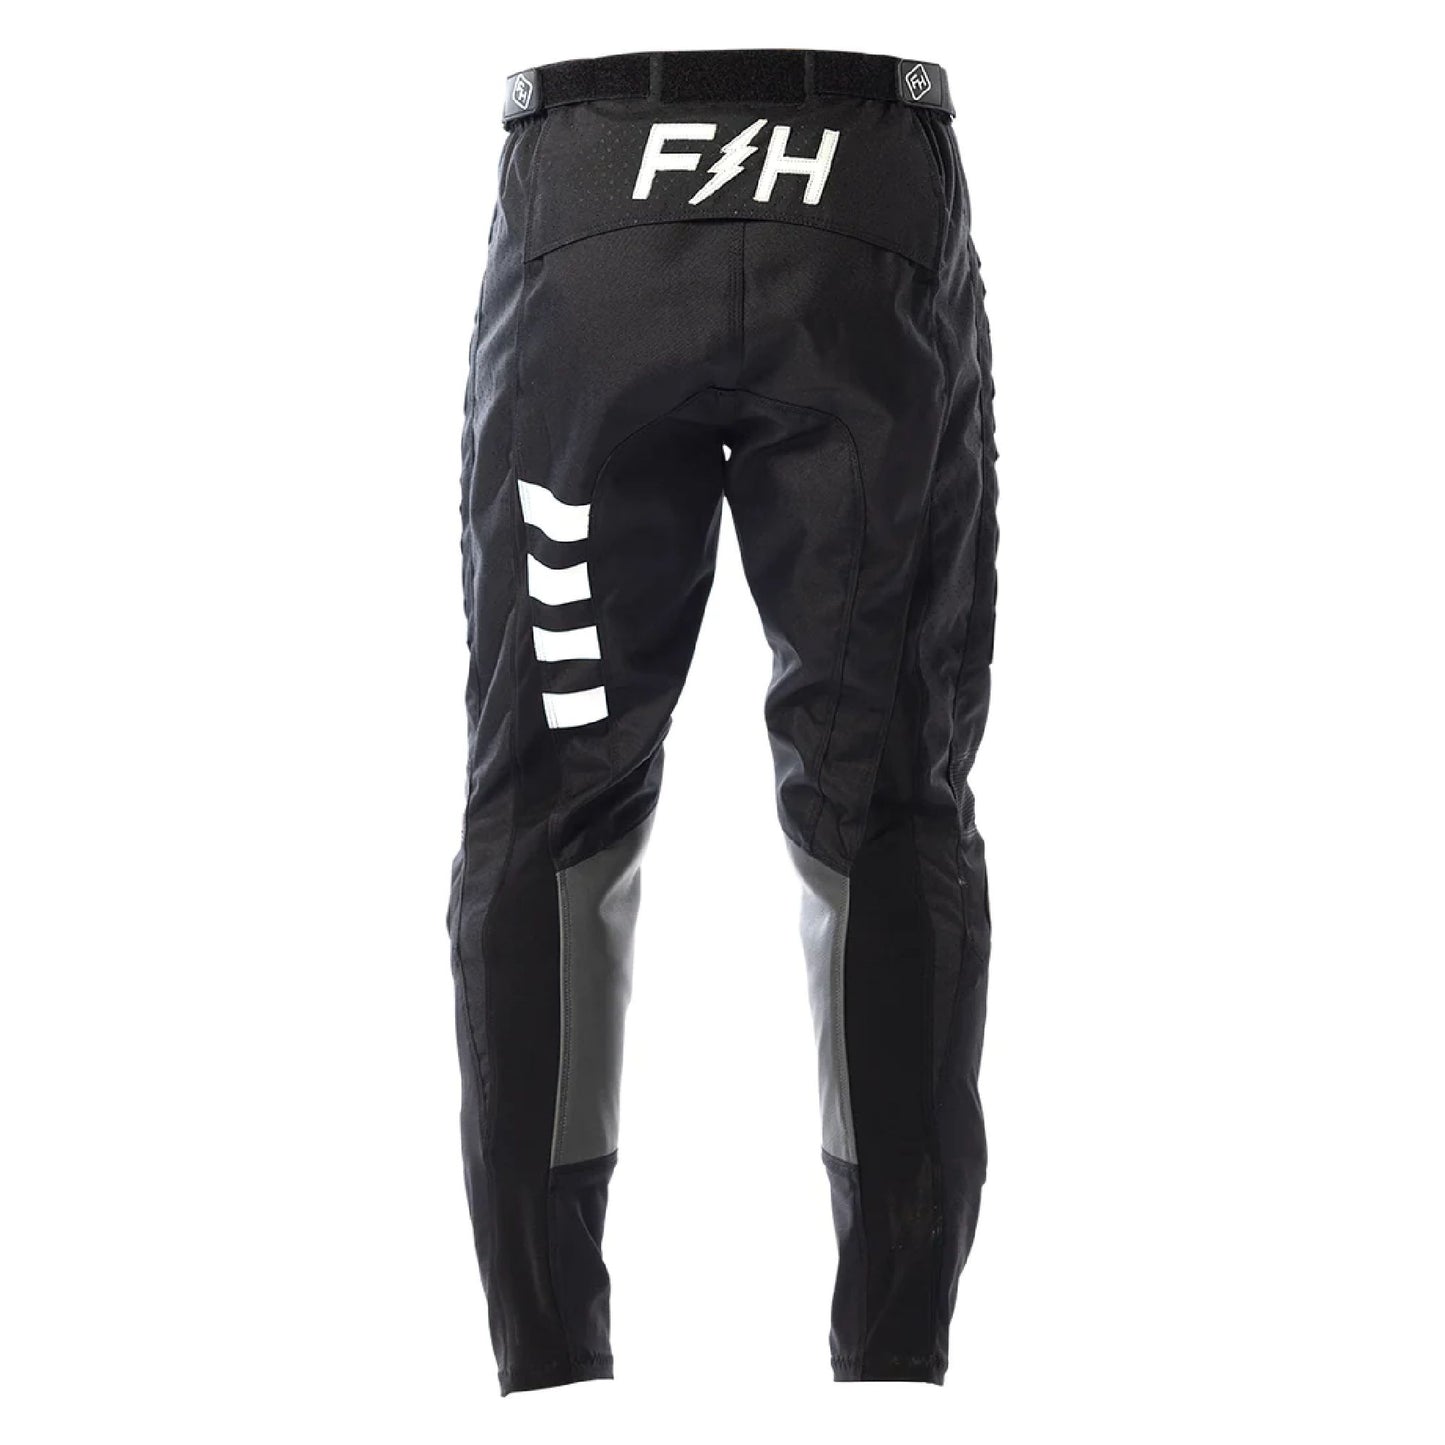 Fasthouse Grindhouse Pants Black Bike Pants